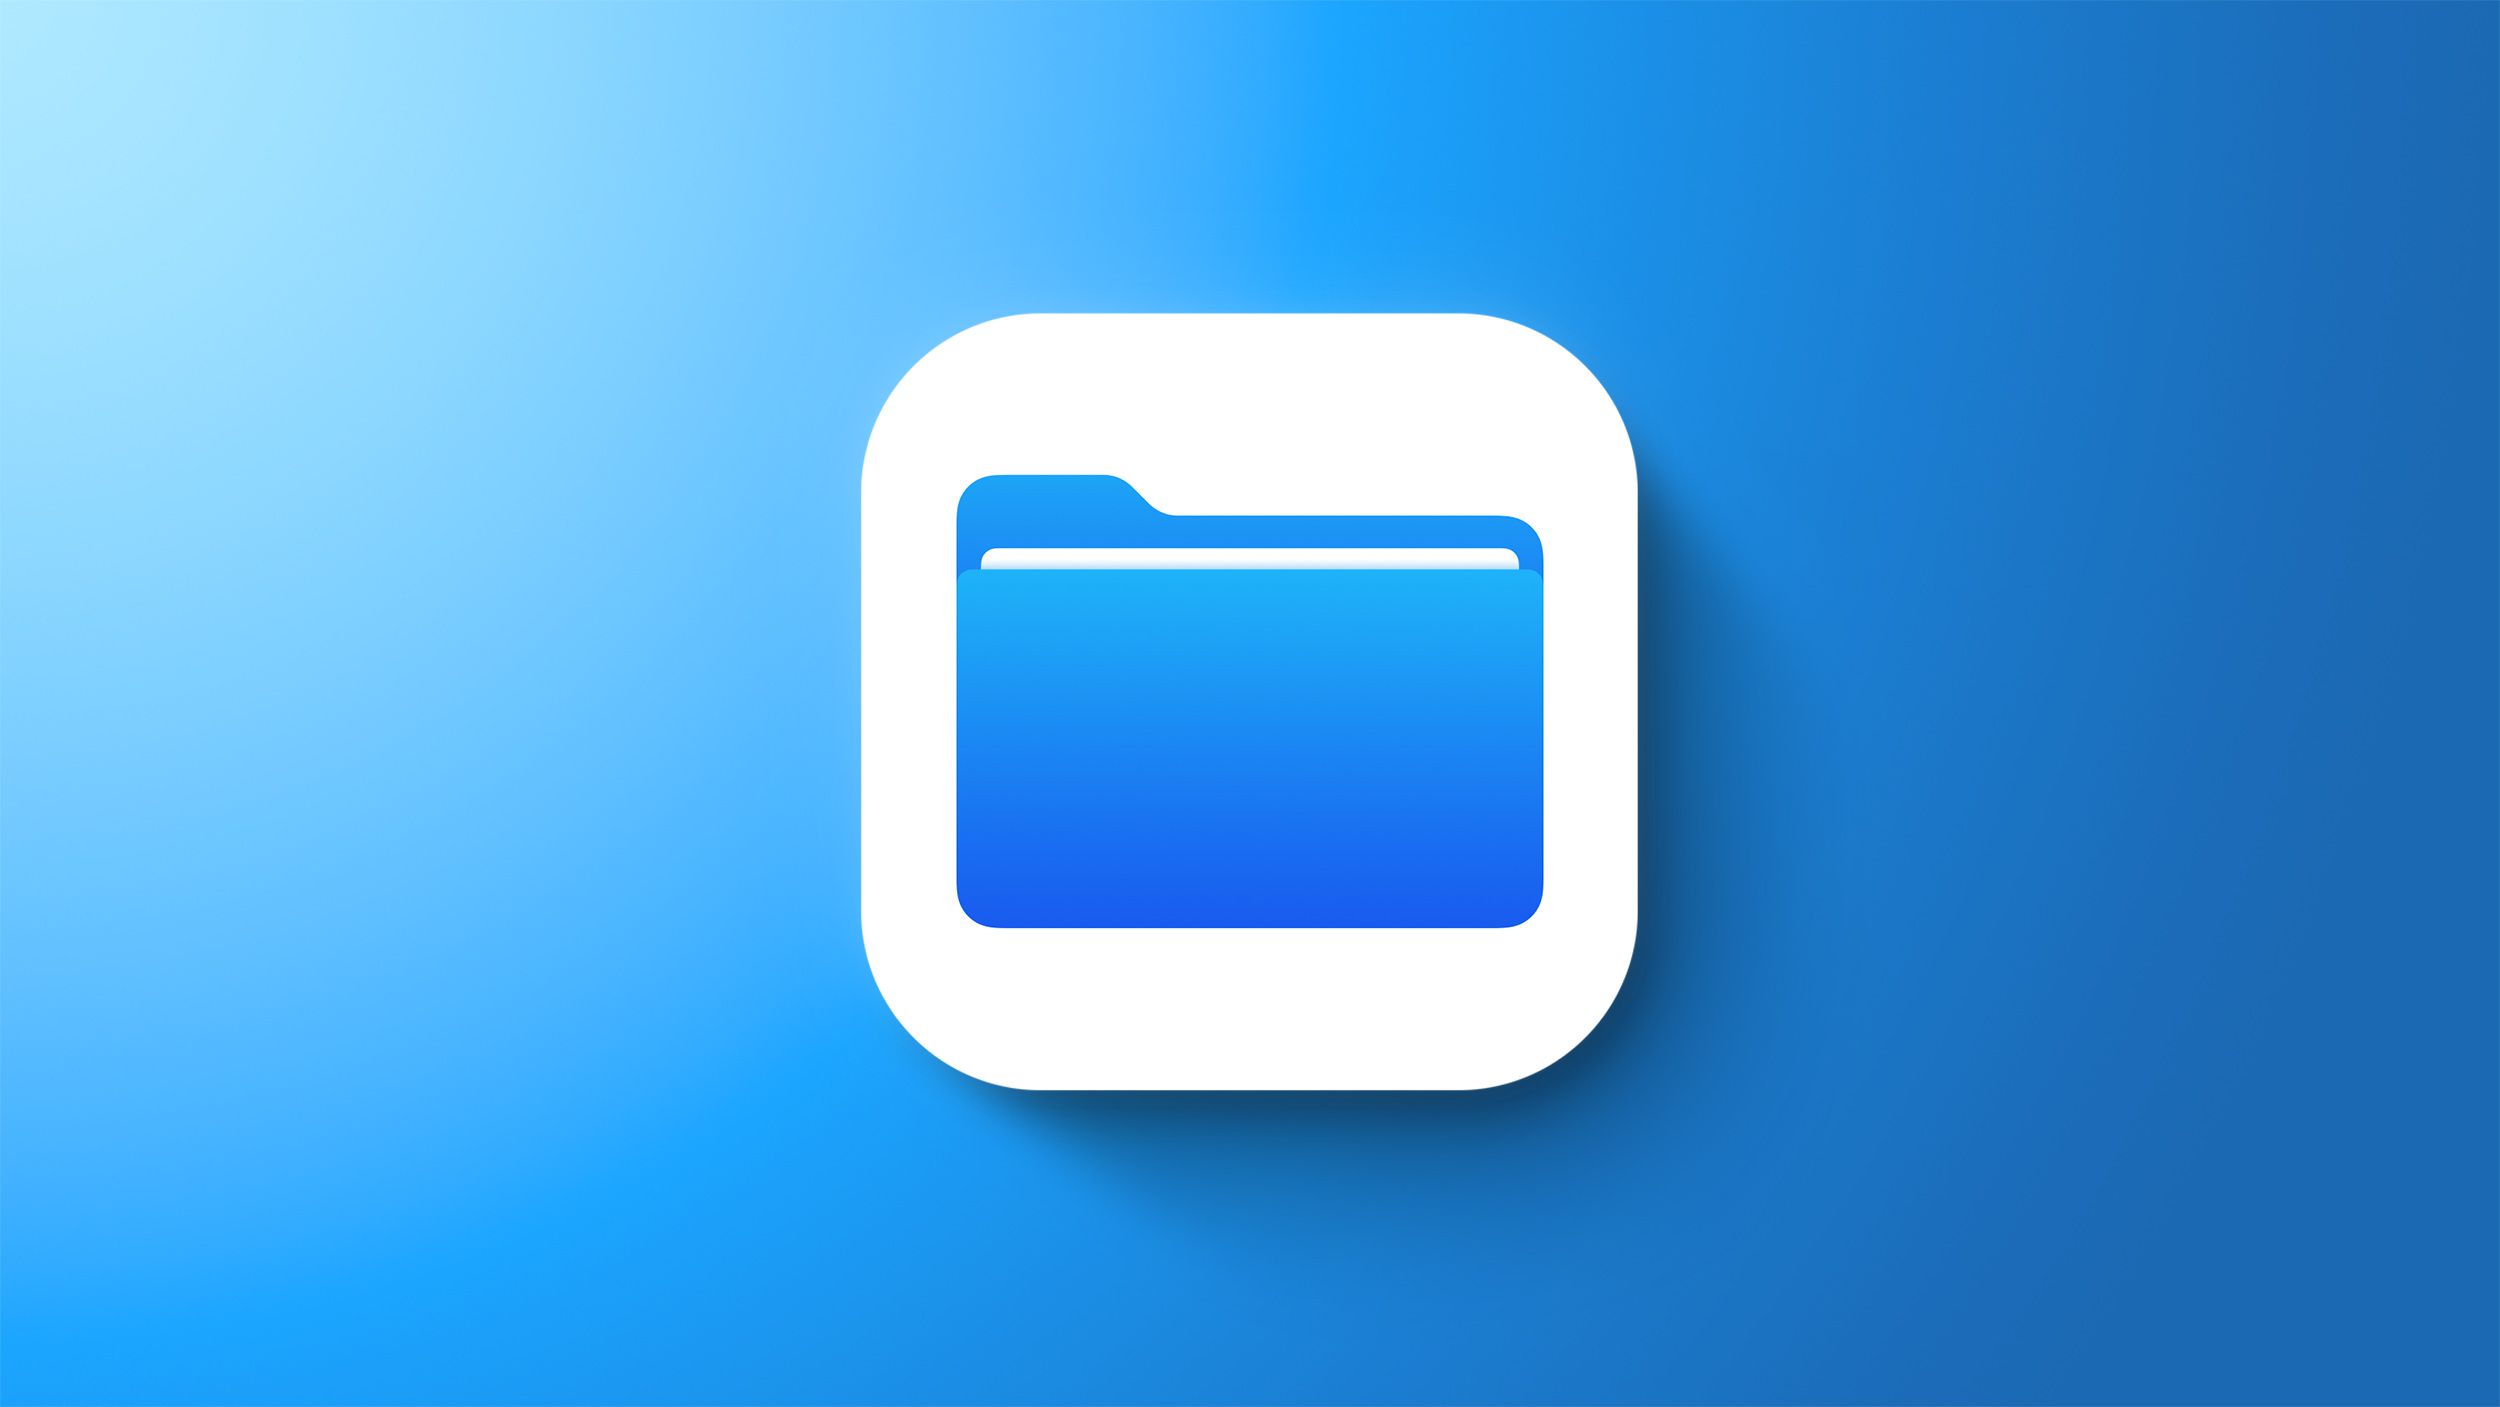 iPadOS 15: Files App Gains NTFS Support, Progress Indicator, and More - MacRumors